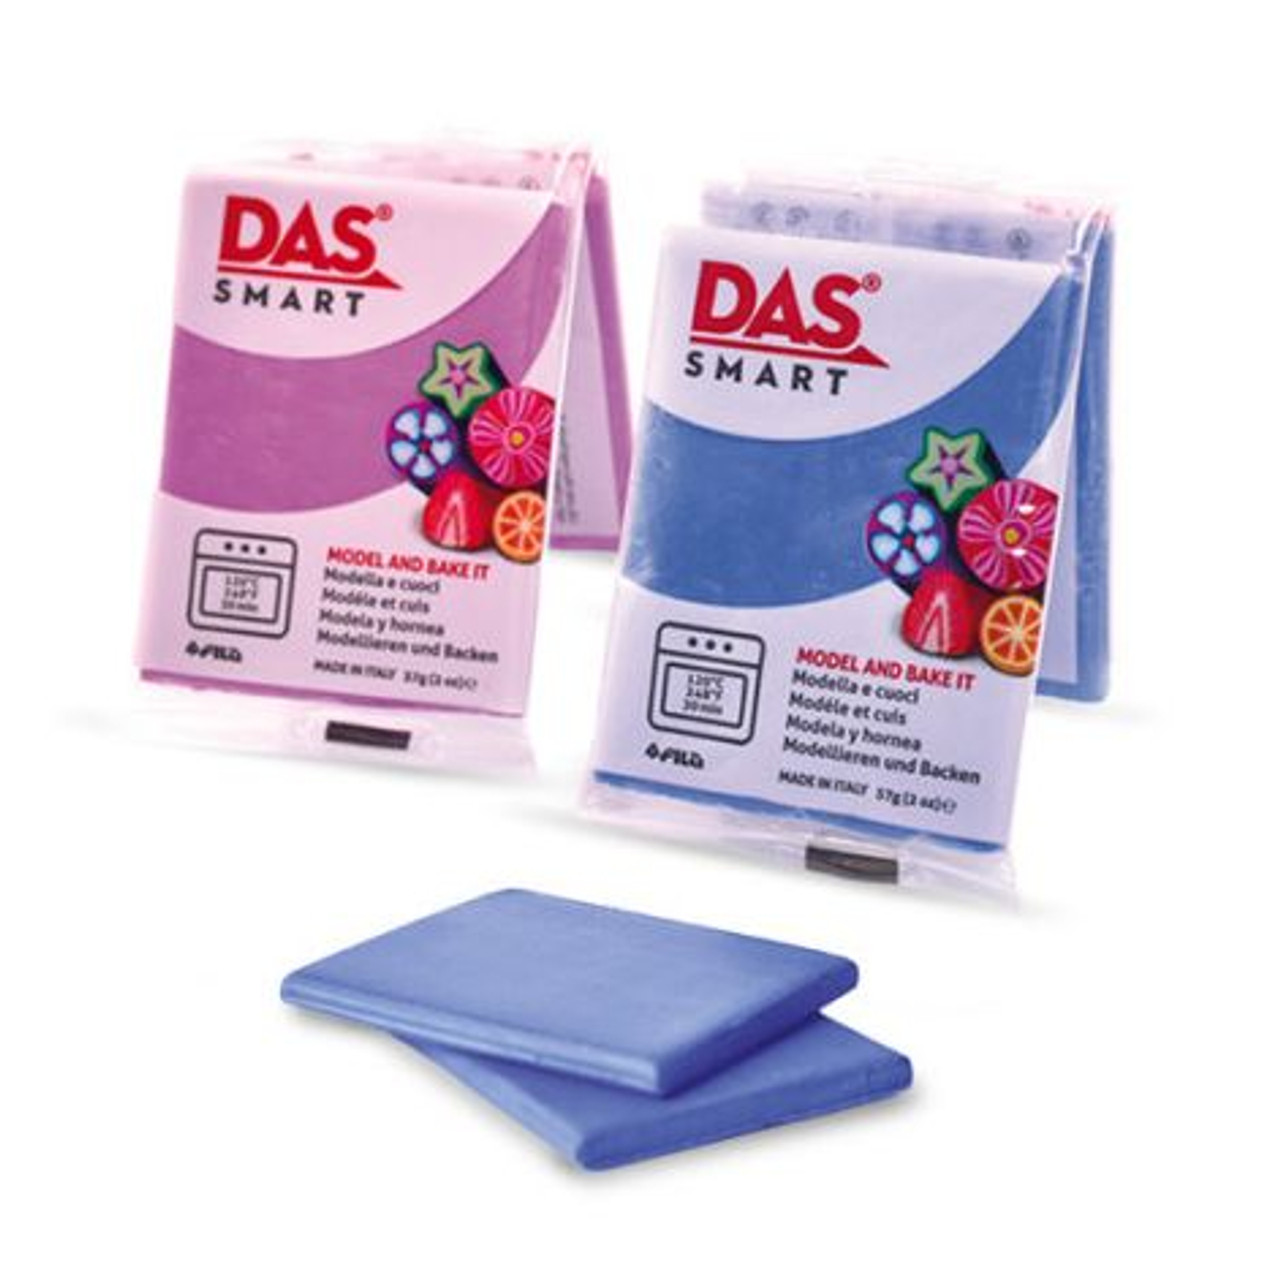 DAS Smart Polymer Clay - White, 12 oz